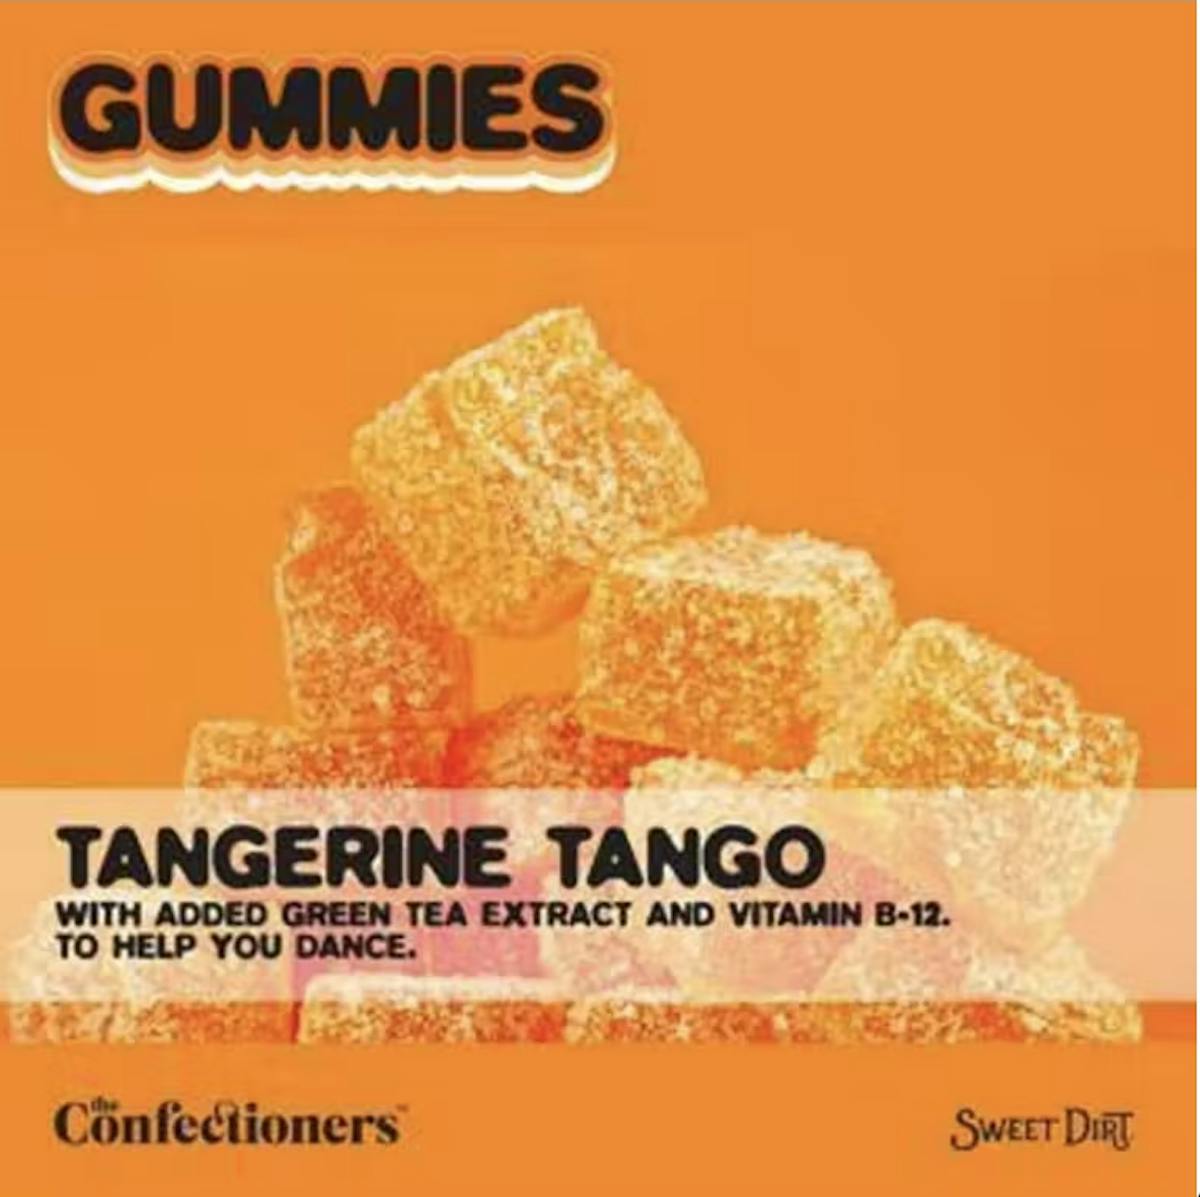 Image of Tangerine Tango Gummies